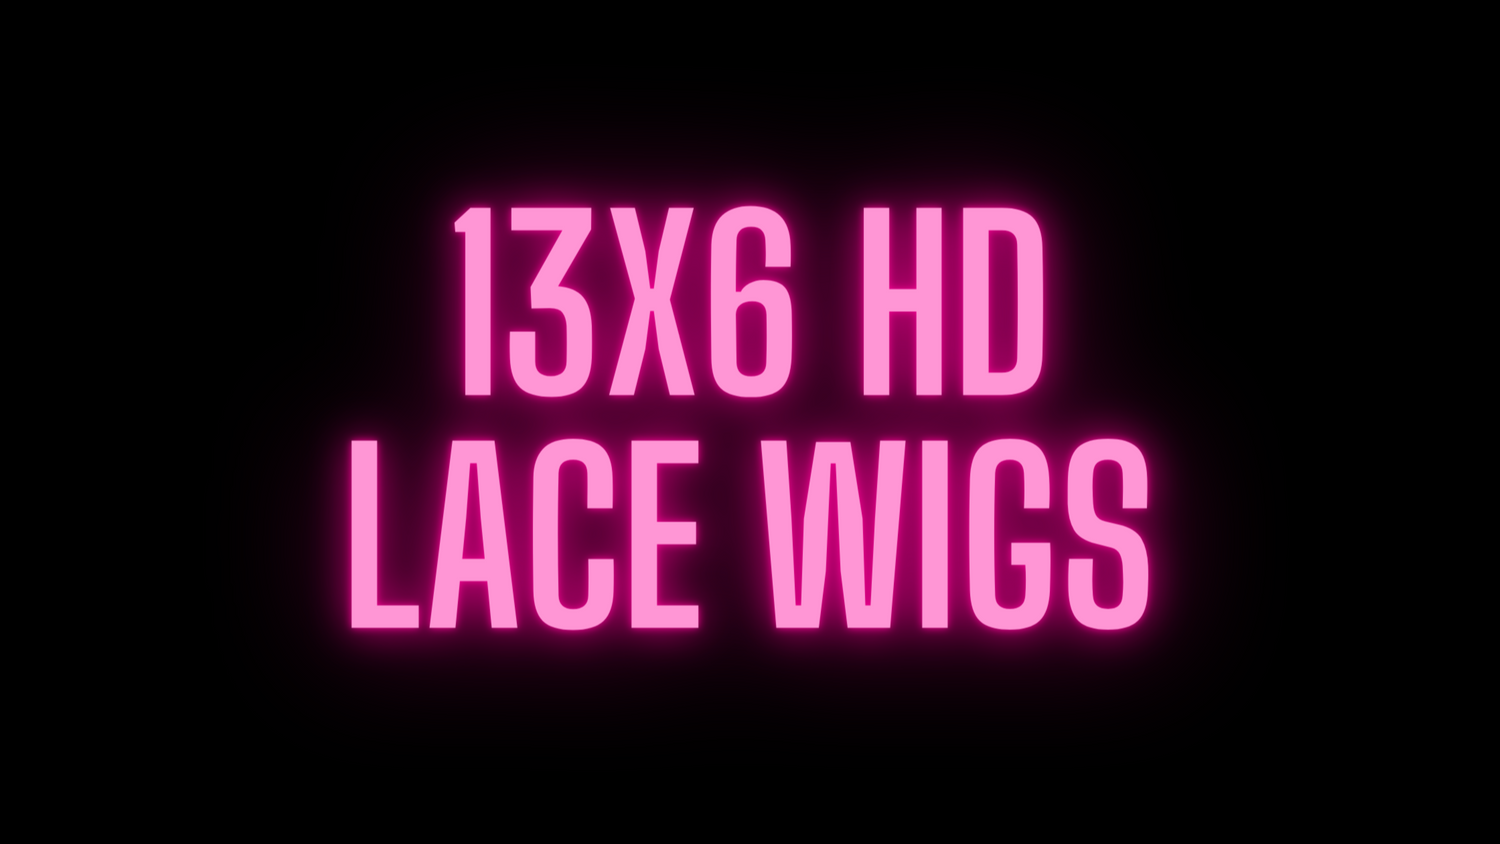 13x6 HD Lace Wigs